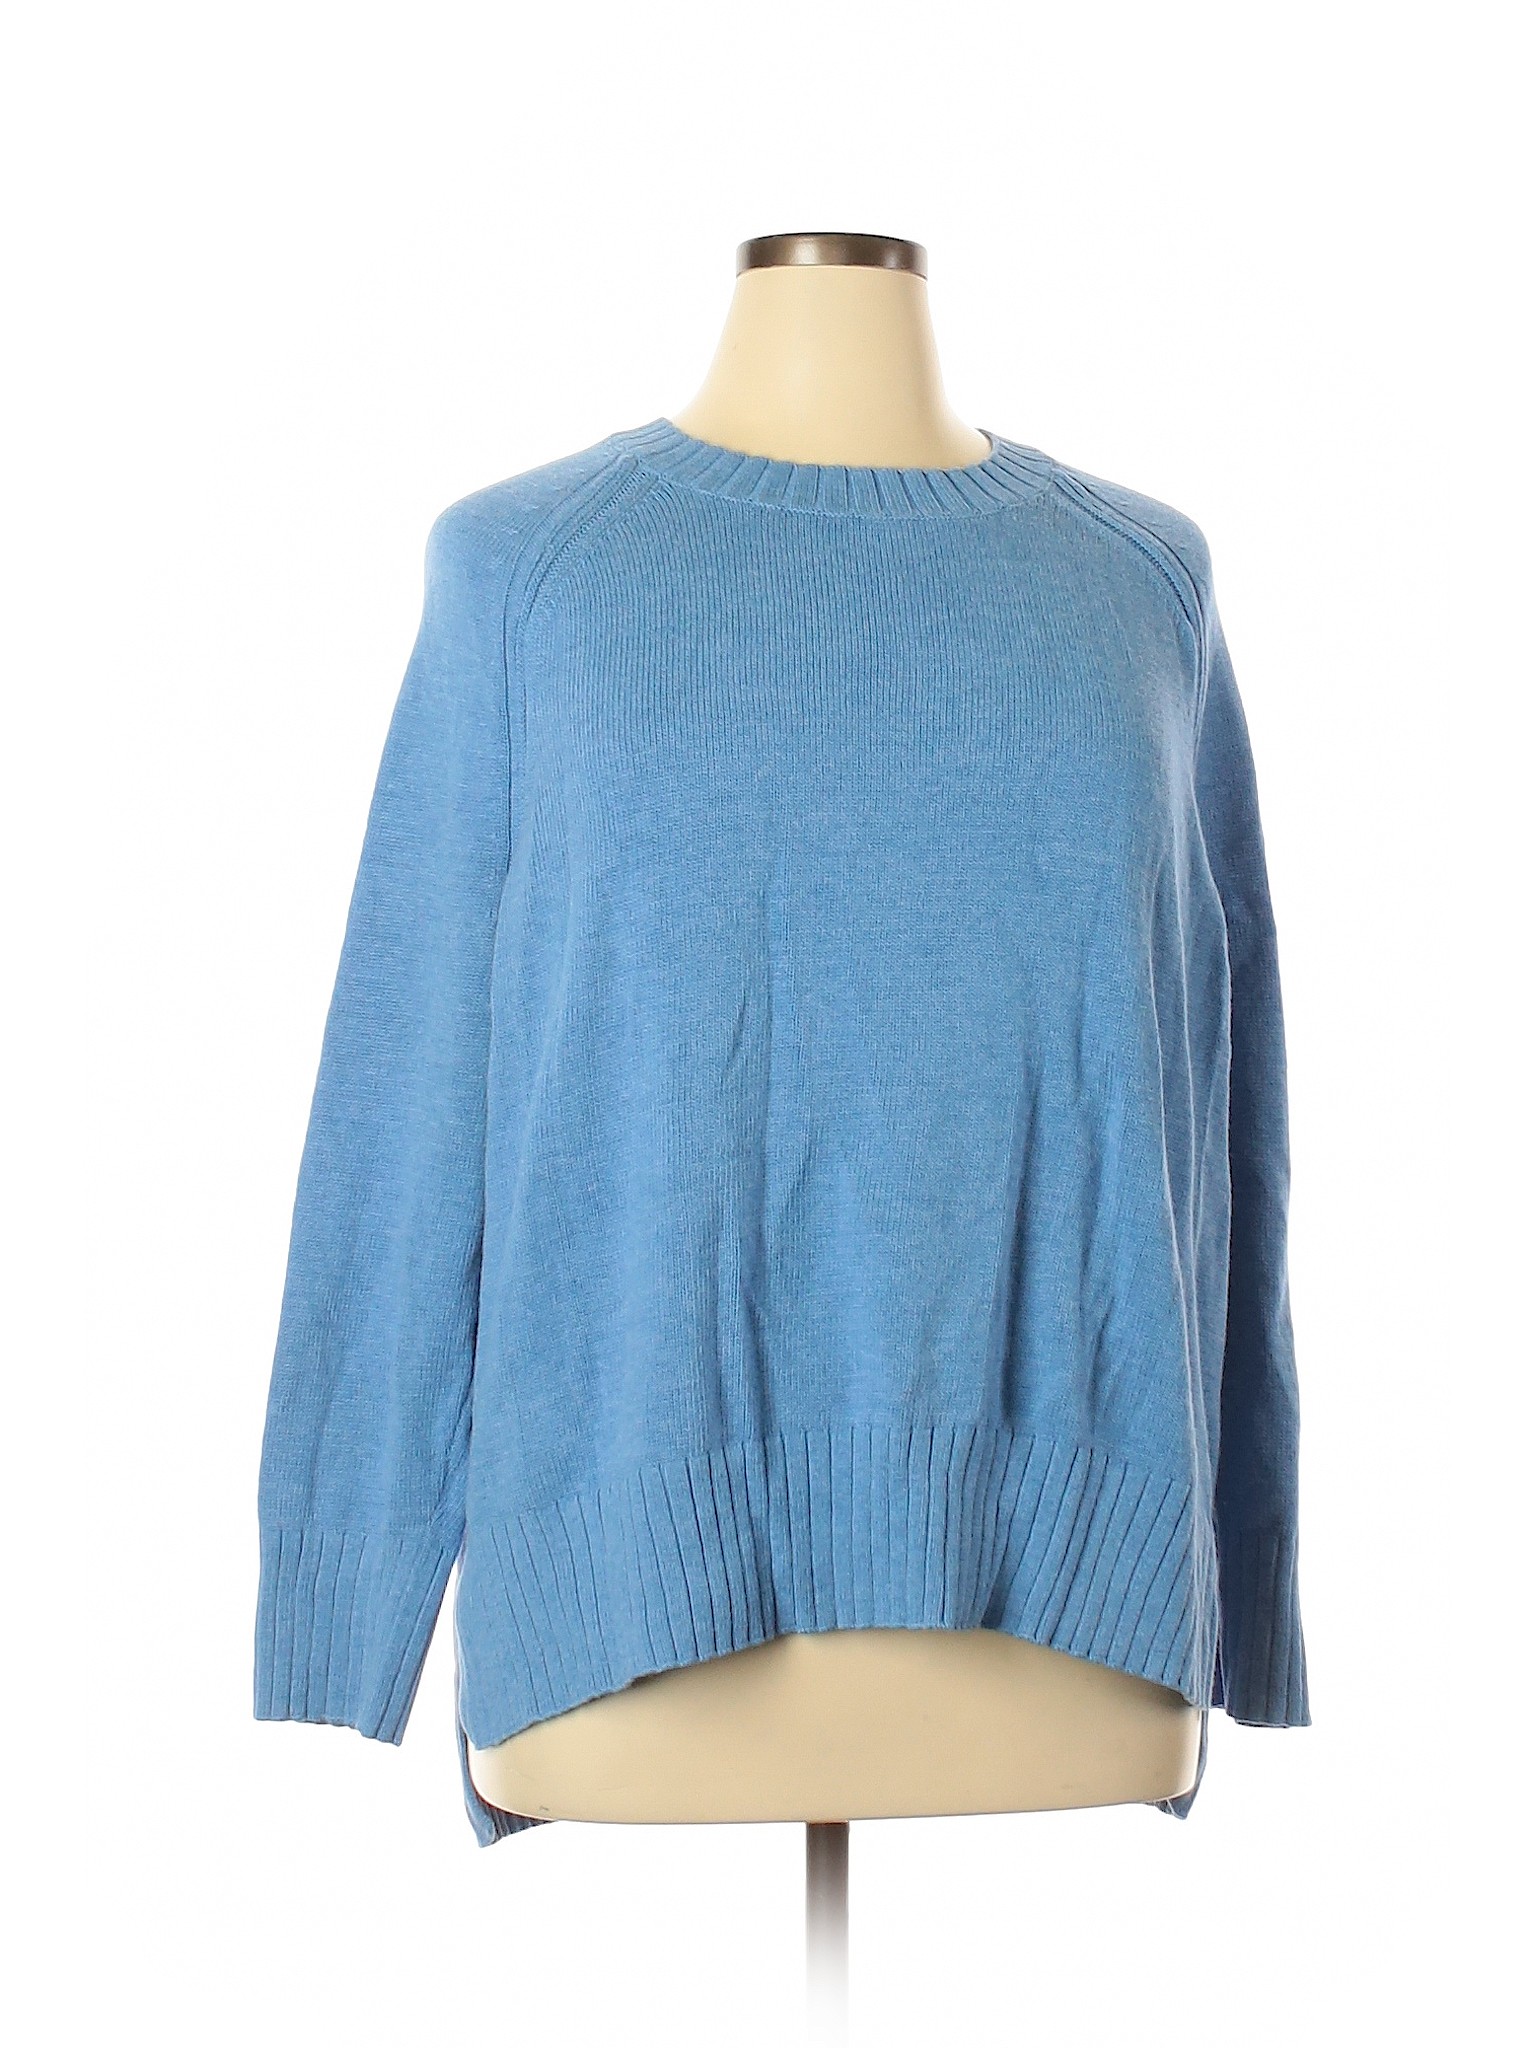 Old Navy Women Blue Pullover Sweater XL | eBay